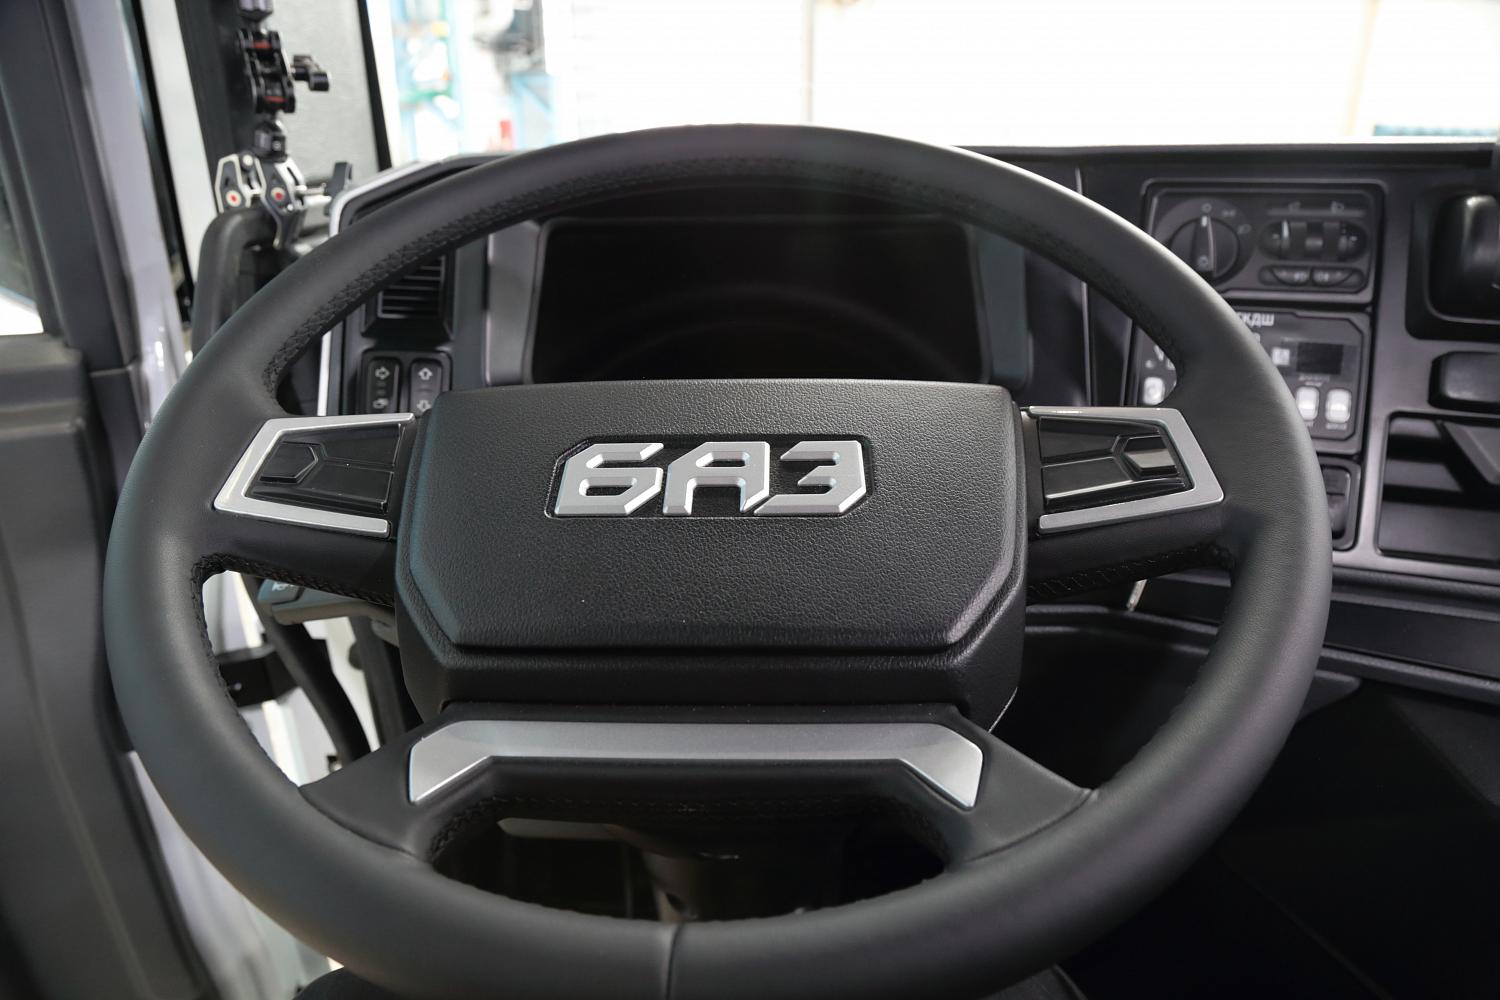 Новый габаритный грузовик БАЗ-S36A11 покажут на форуме «Армия-2023»  